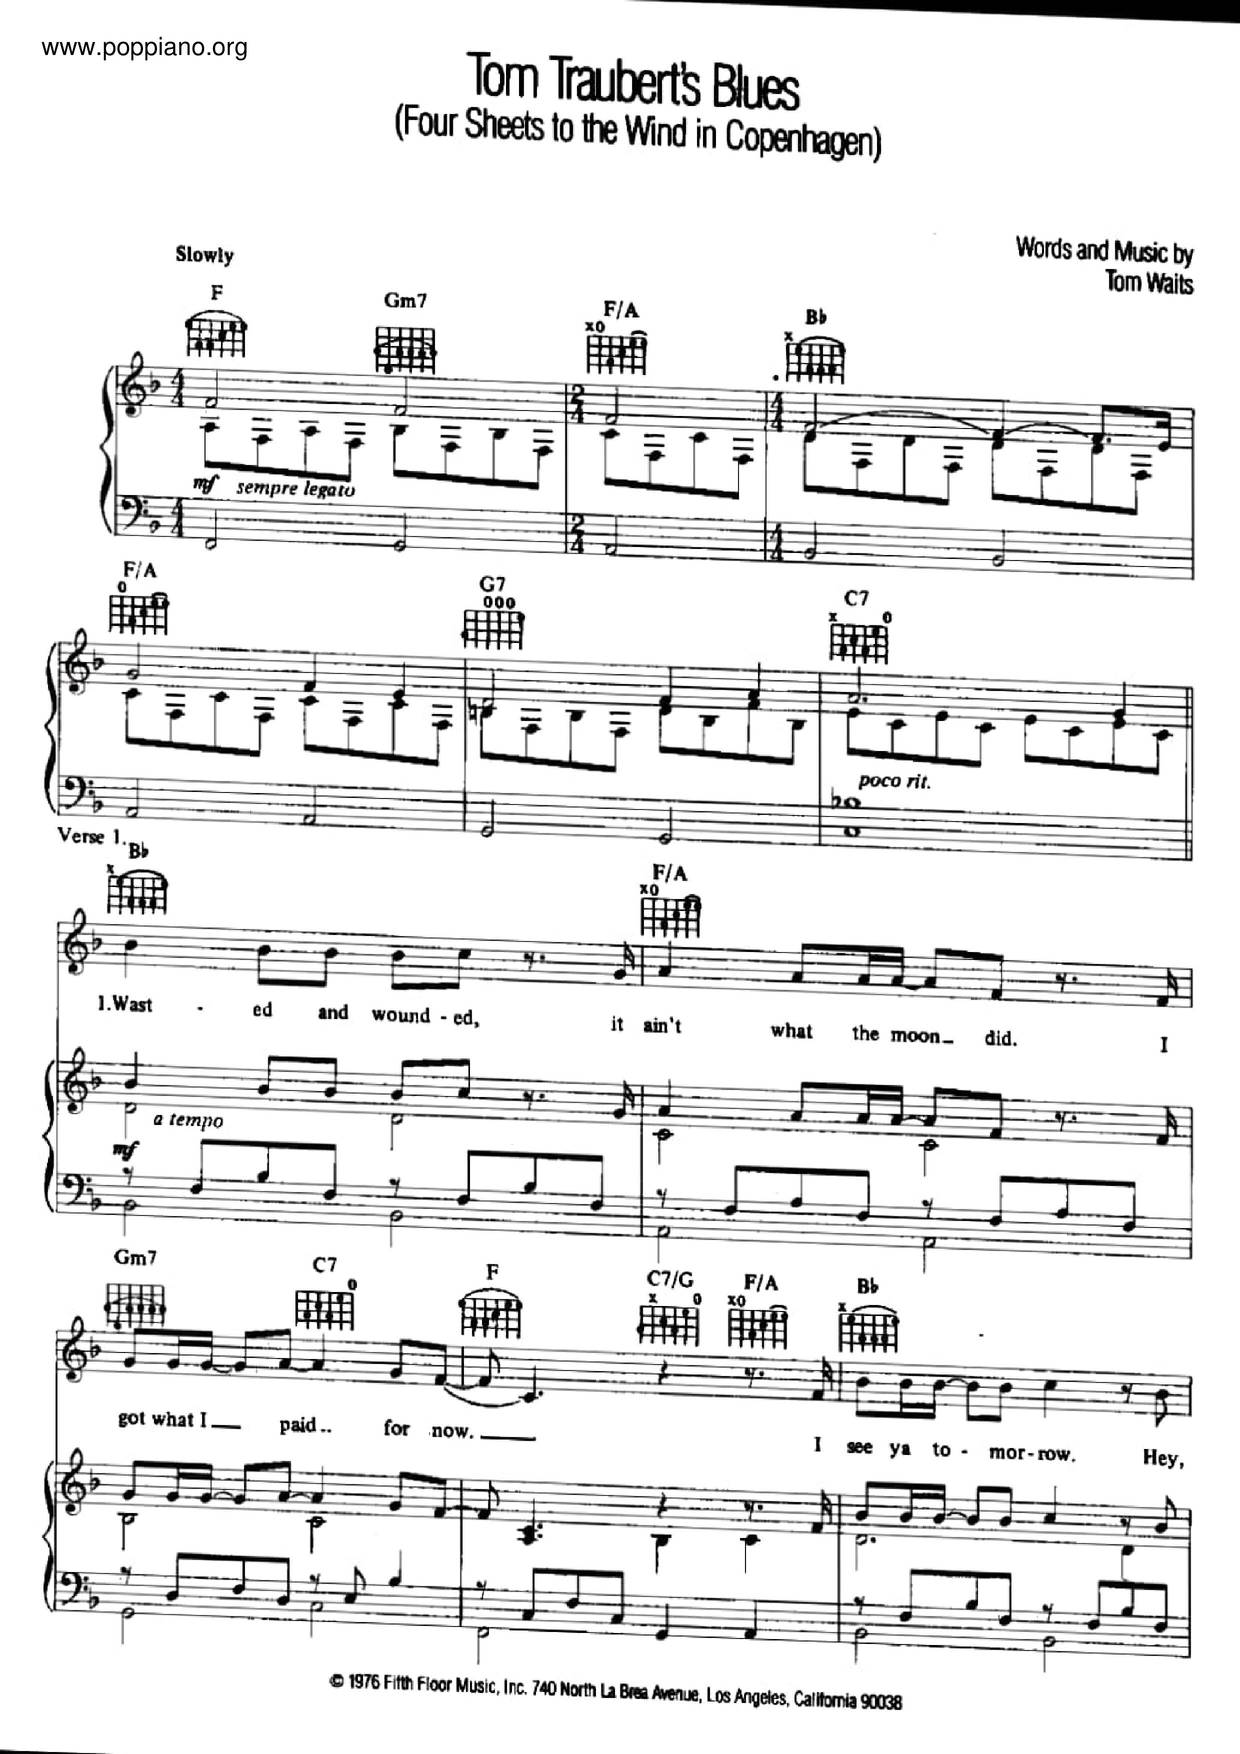 Tom Traubert's Blues Score